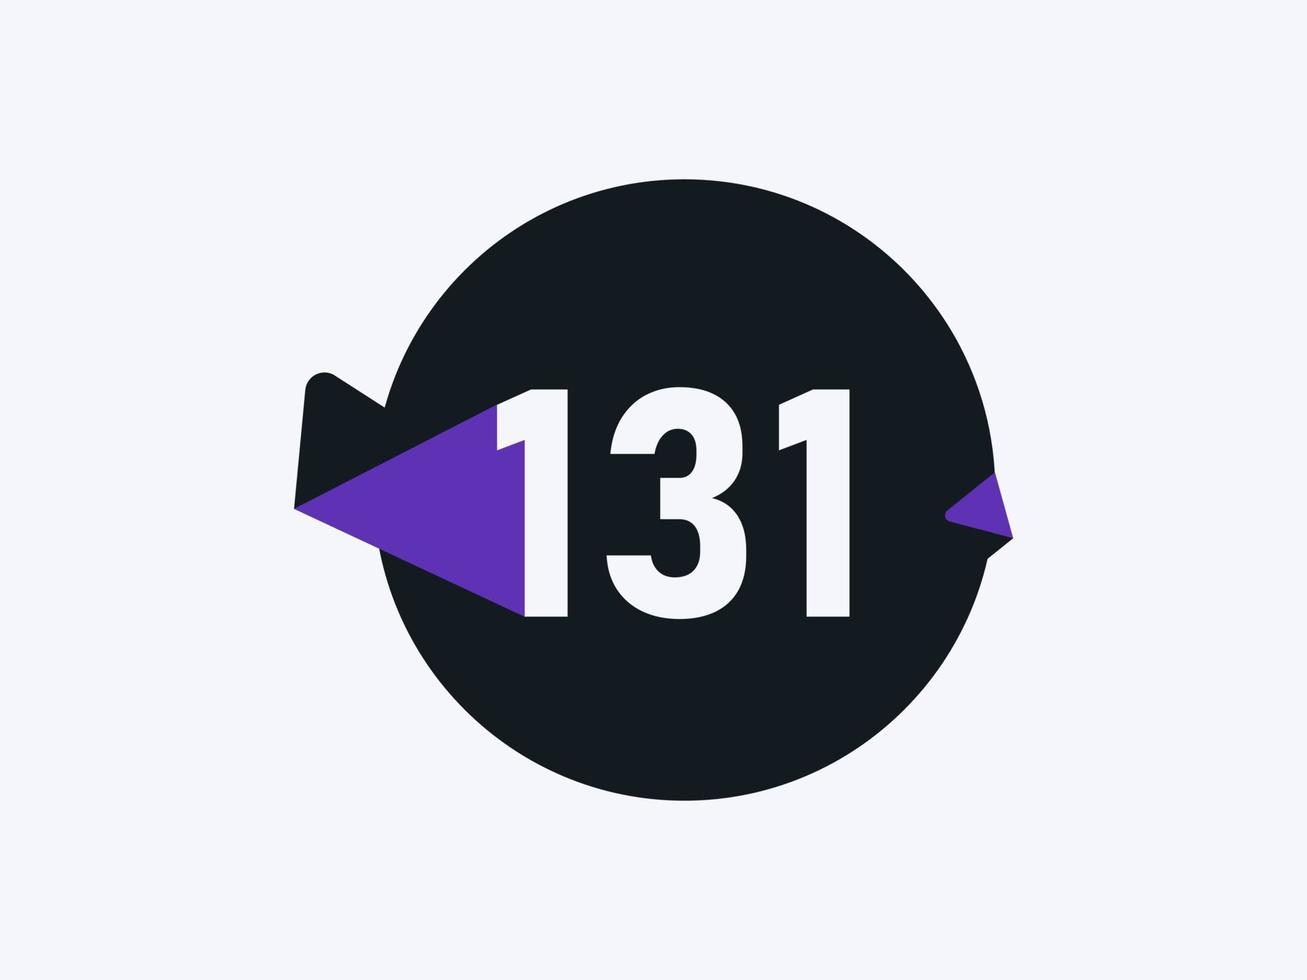 131 Number logo icon design vector image. Number logo icon design vector image